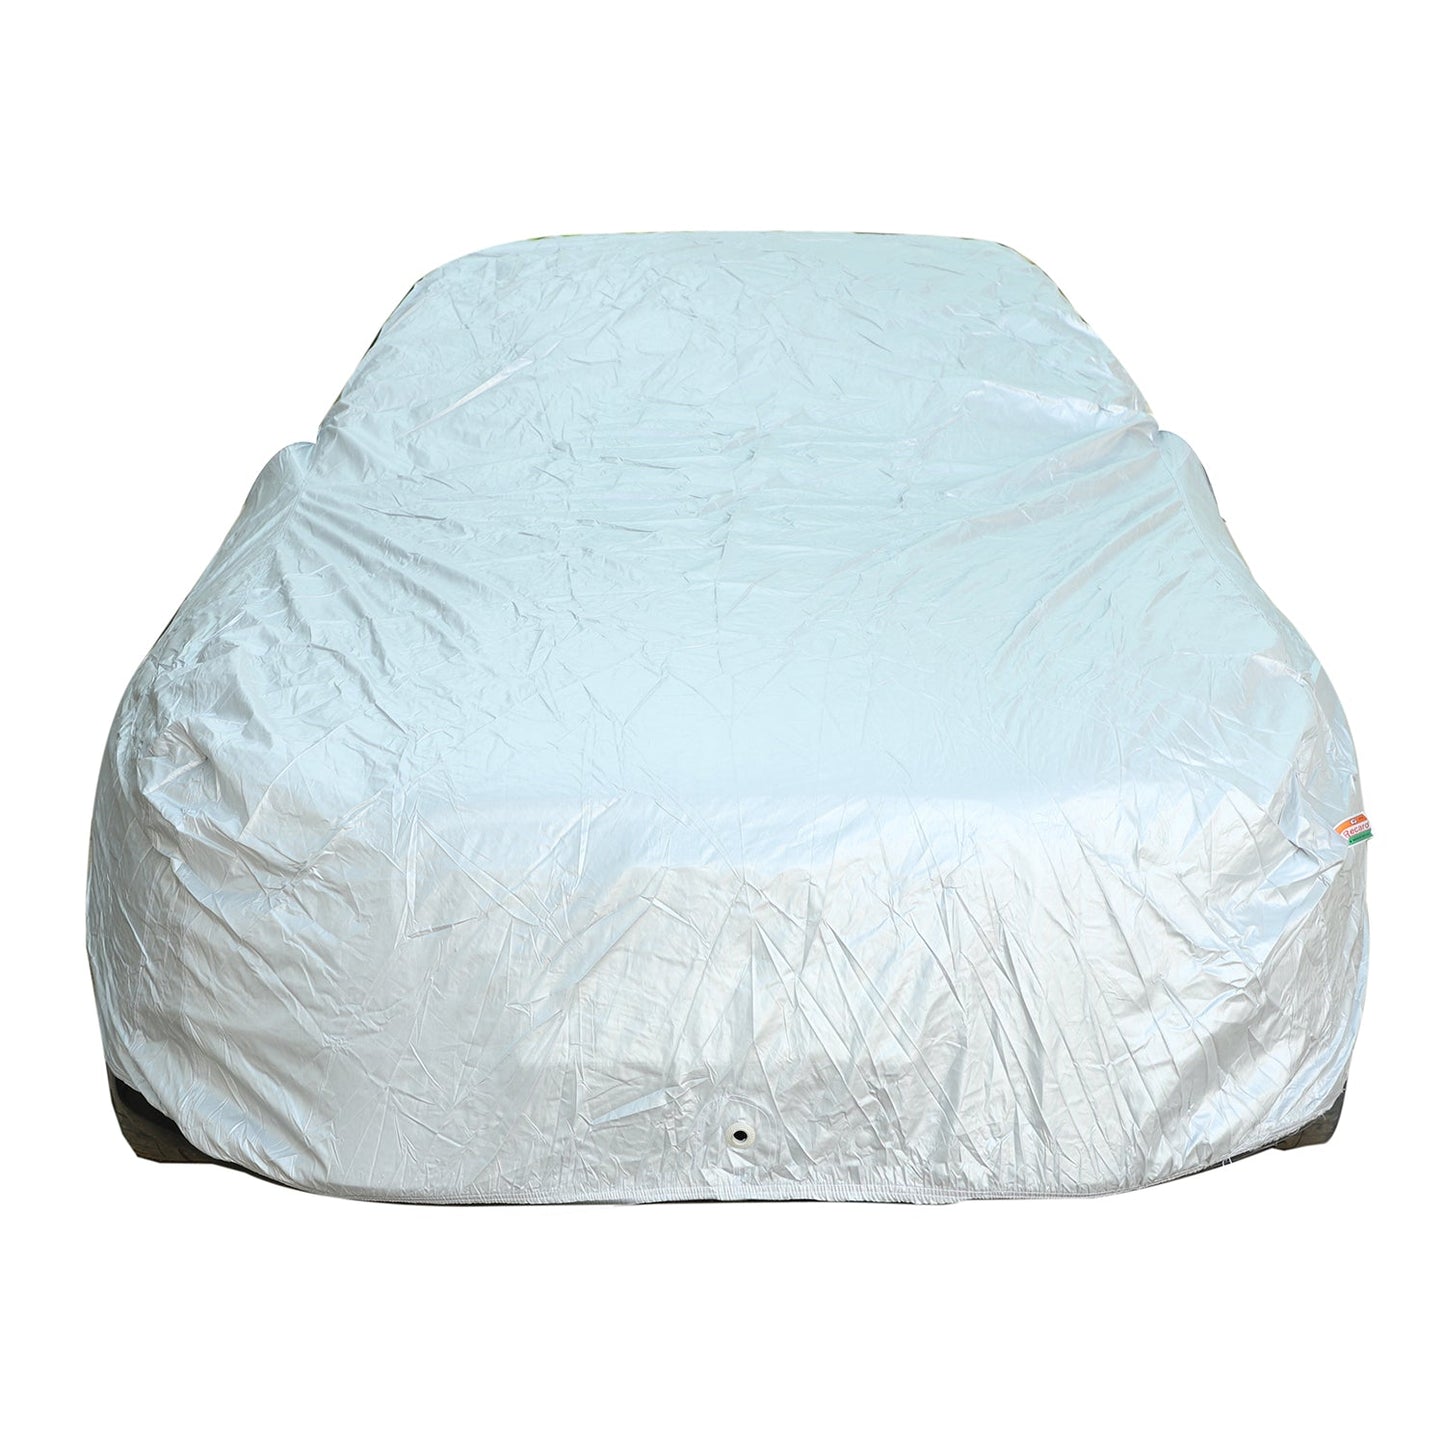 Oshotto Silvertech Car Body Cover (Without Mirror Pocket) For Maruti Suzuki Ertiga 2012-2018 - Silver